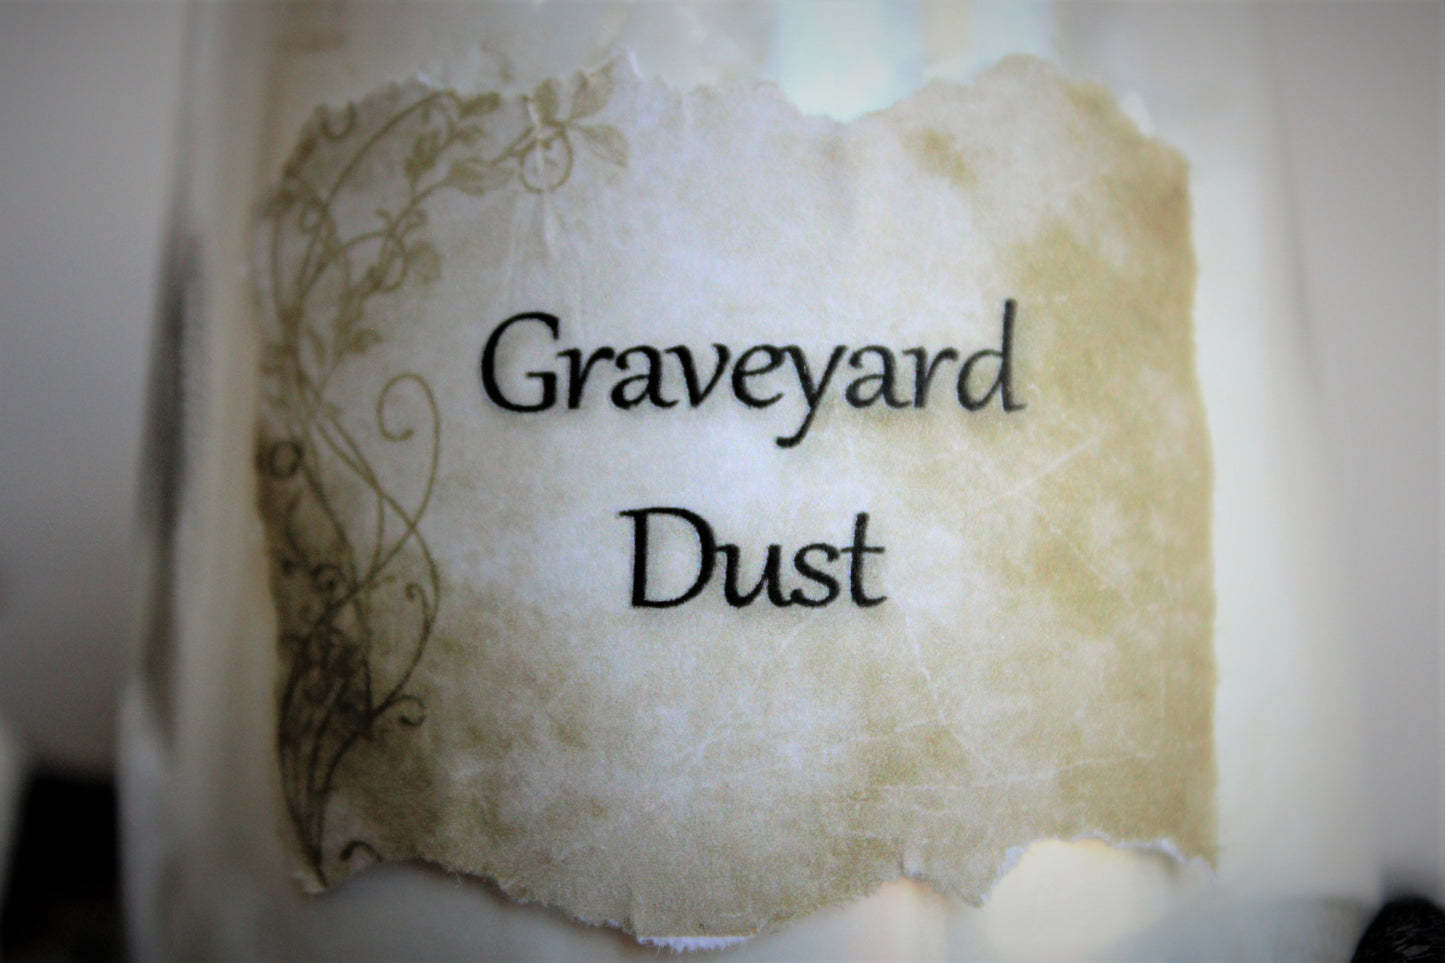 "Graveyard Dust" Scented Talc Free Body Powder in a Vintage Shaker Jar